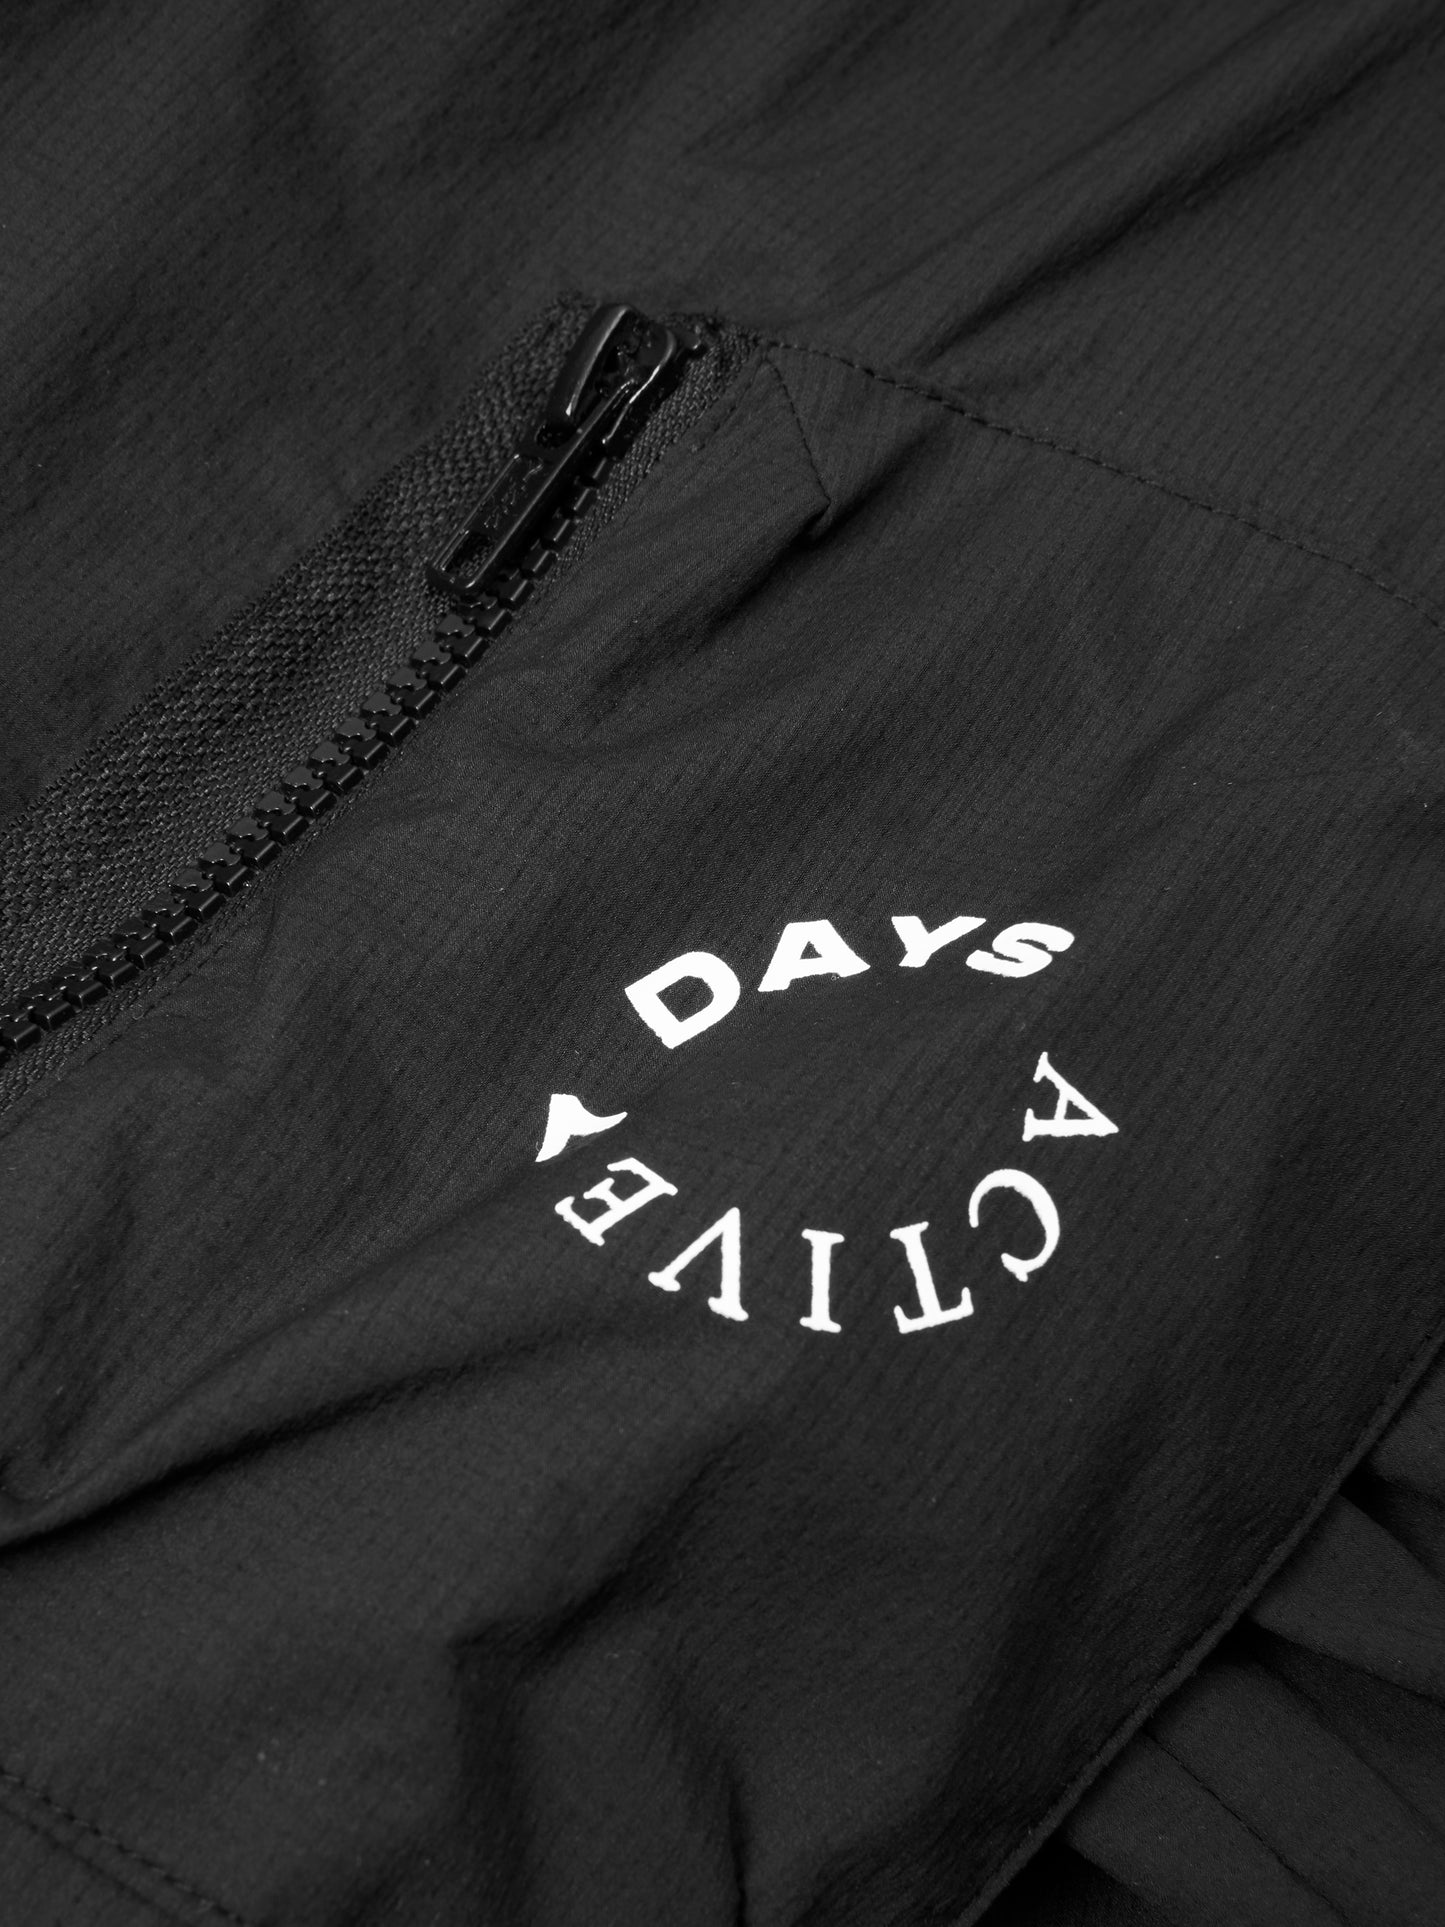 7 DAYS Warm Up Parka Coats 001 Black